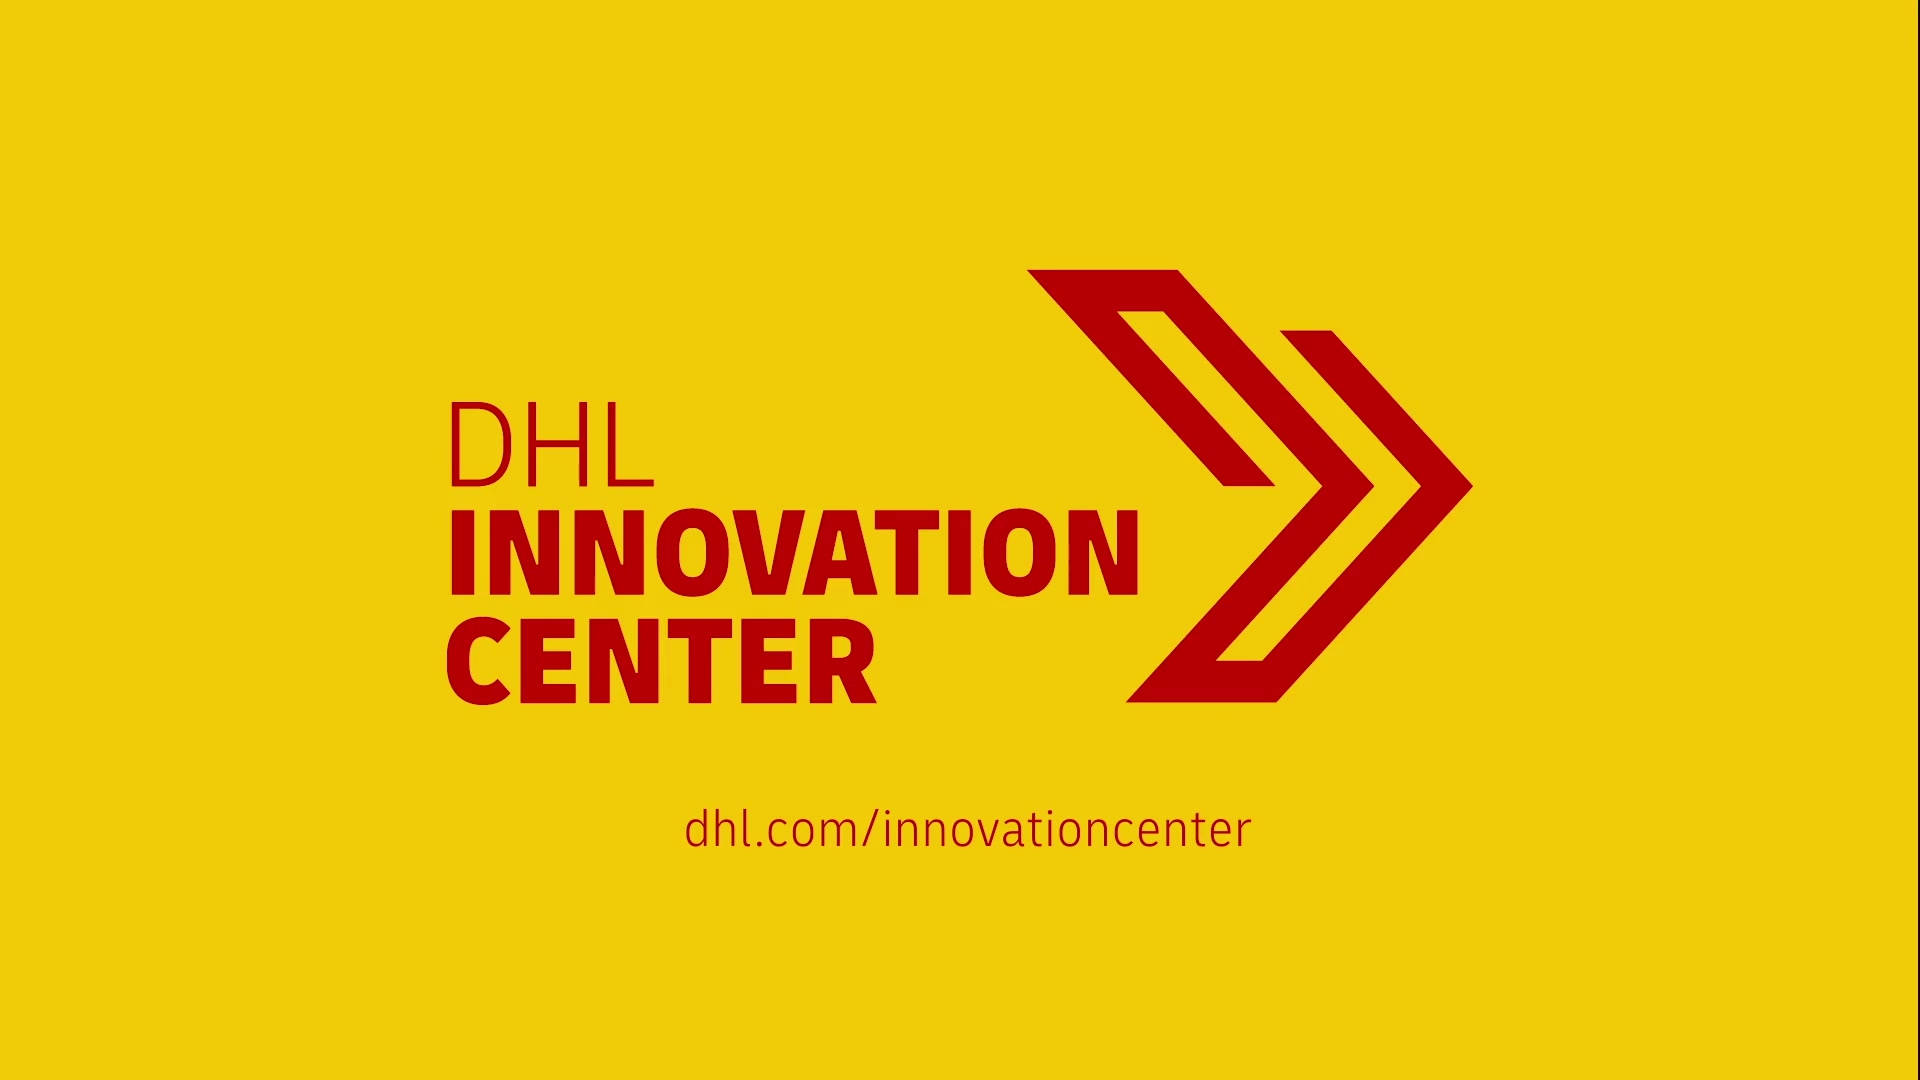 Dhl Innovation Center Banner Background